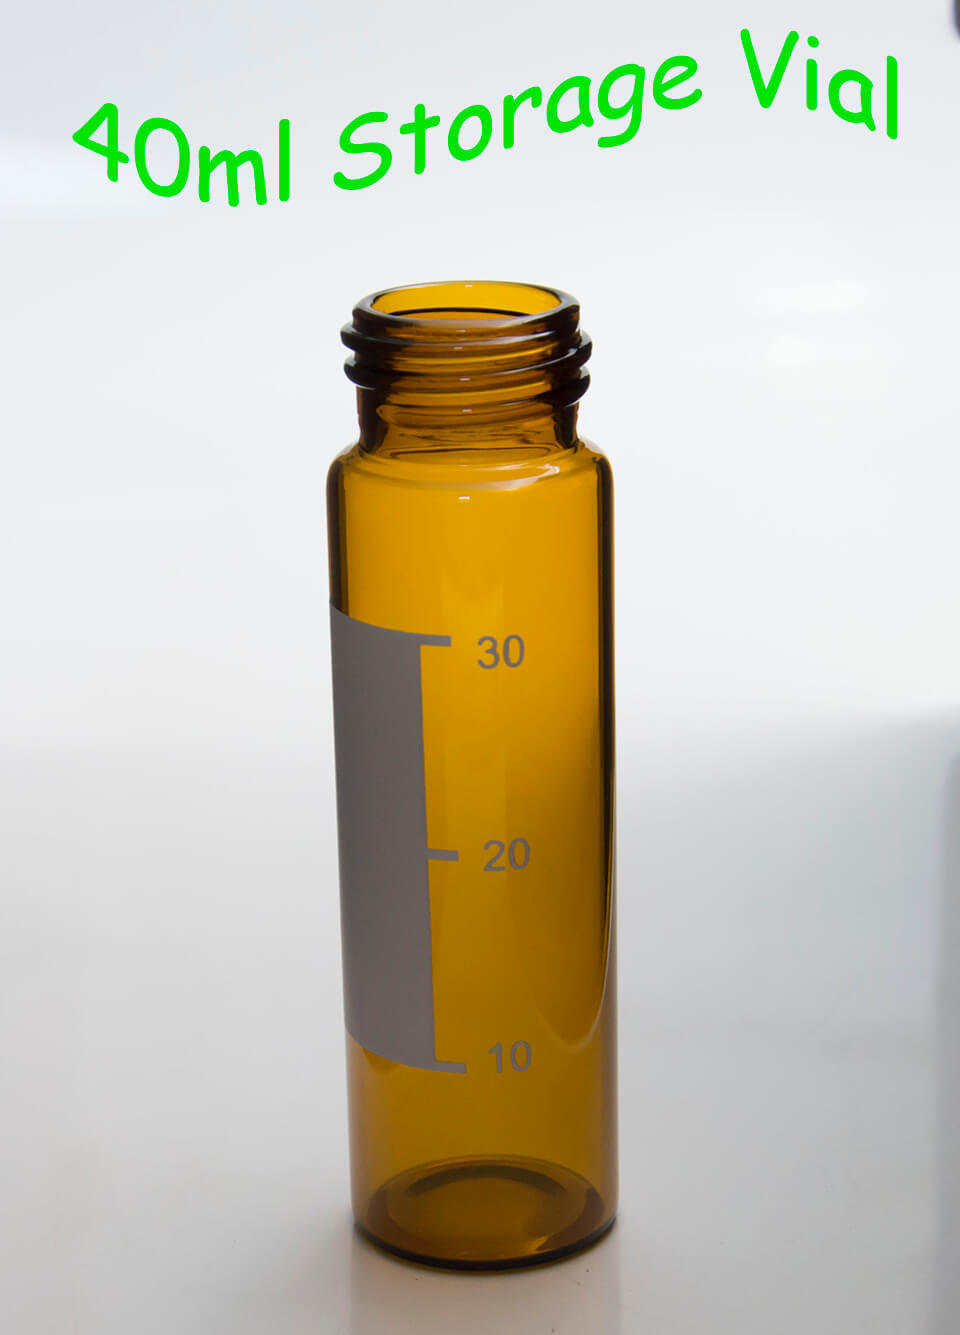 40ml 24-400 storage vial